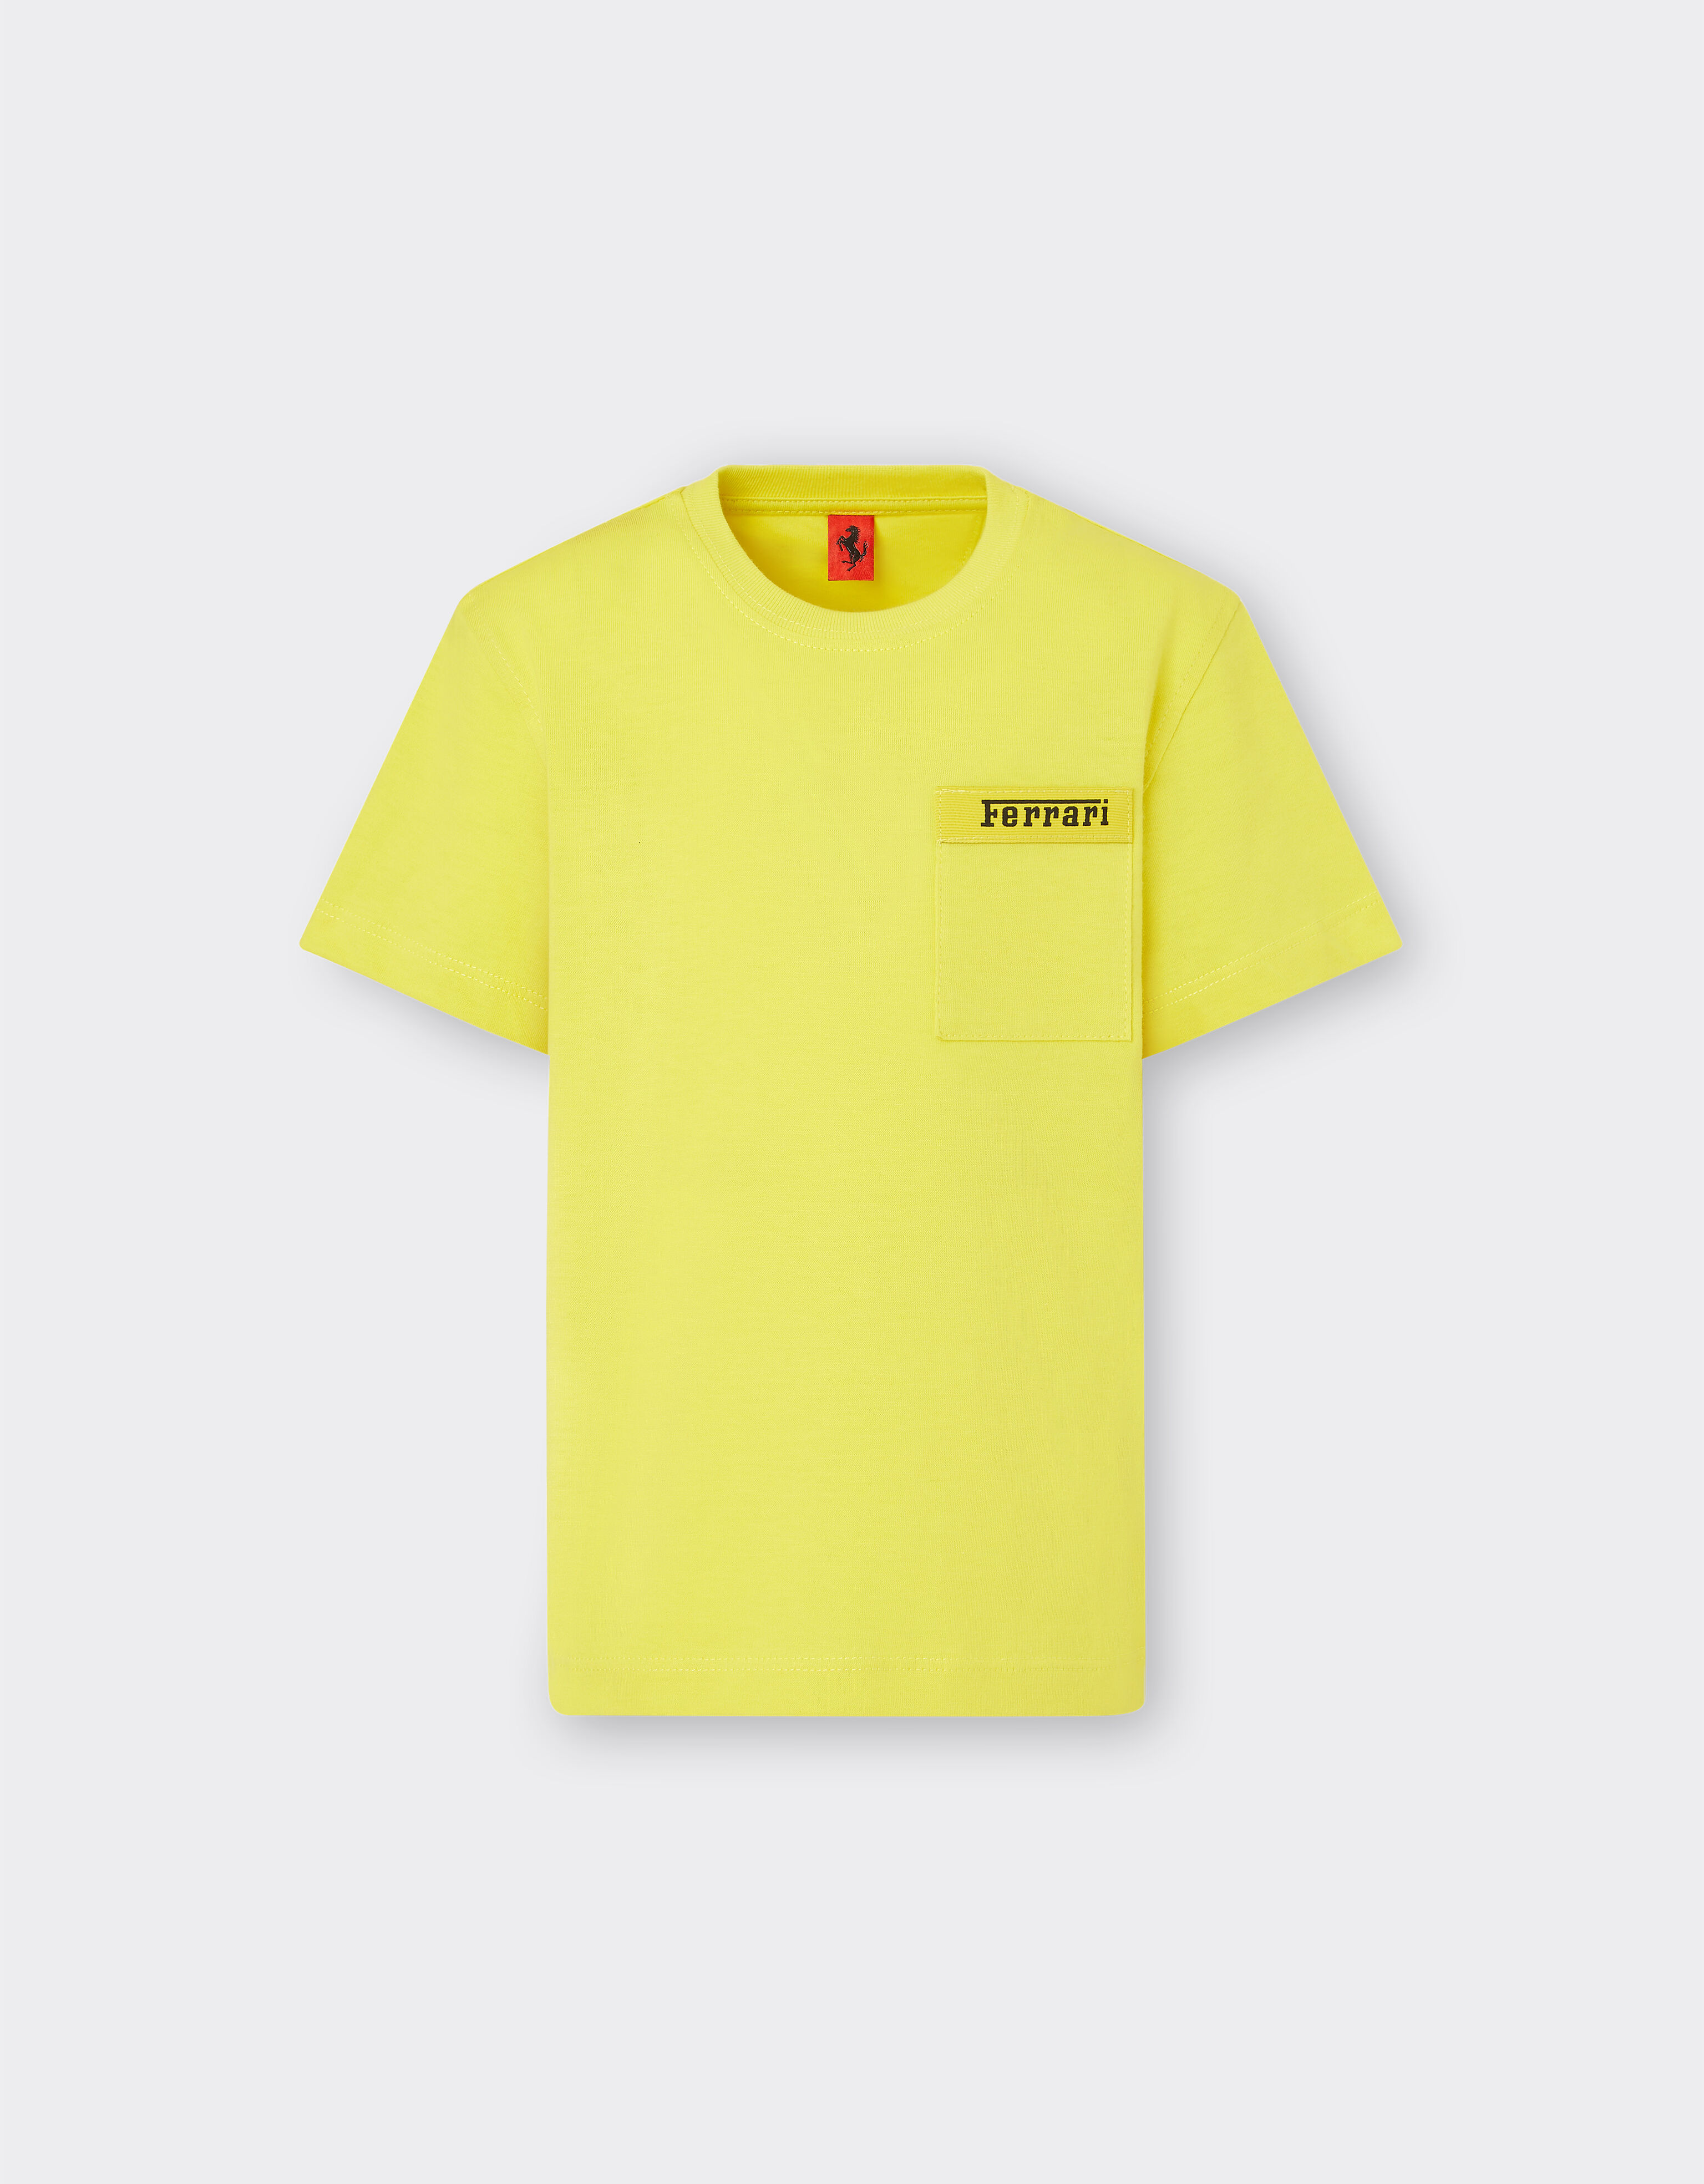 Ferrari Cotton T-shirt with Ferrari logo Giallo Modena 黄色 20162fK